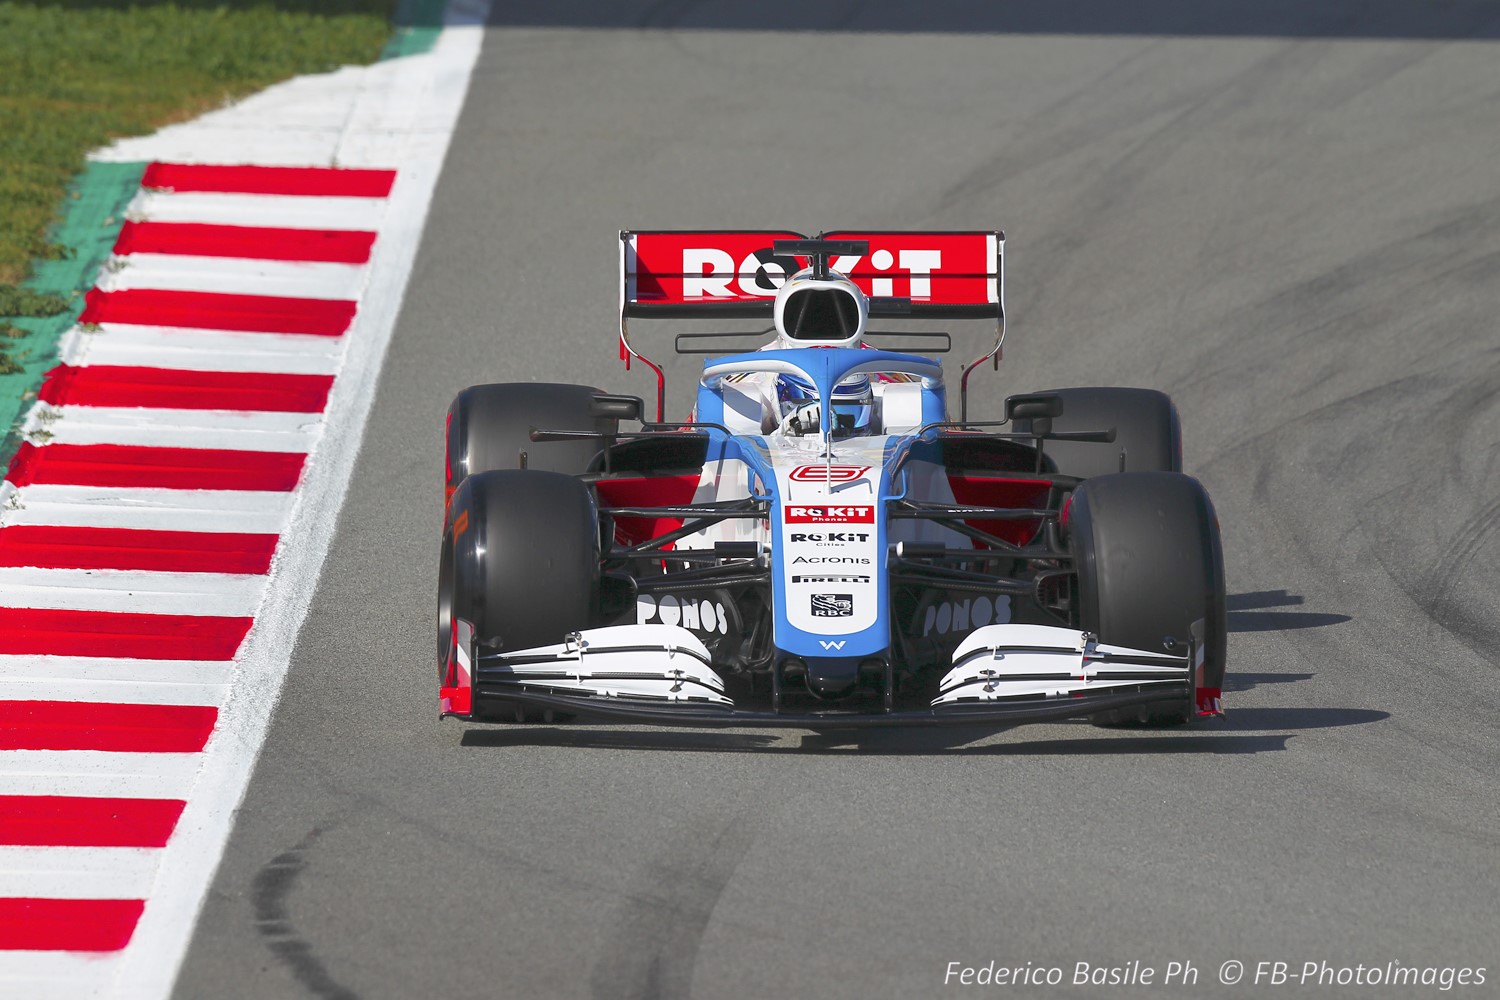 Latifi shows good speed in the Williams